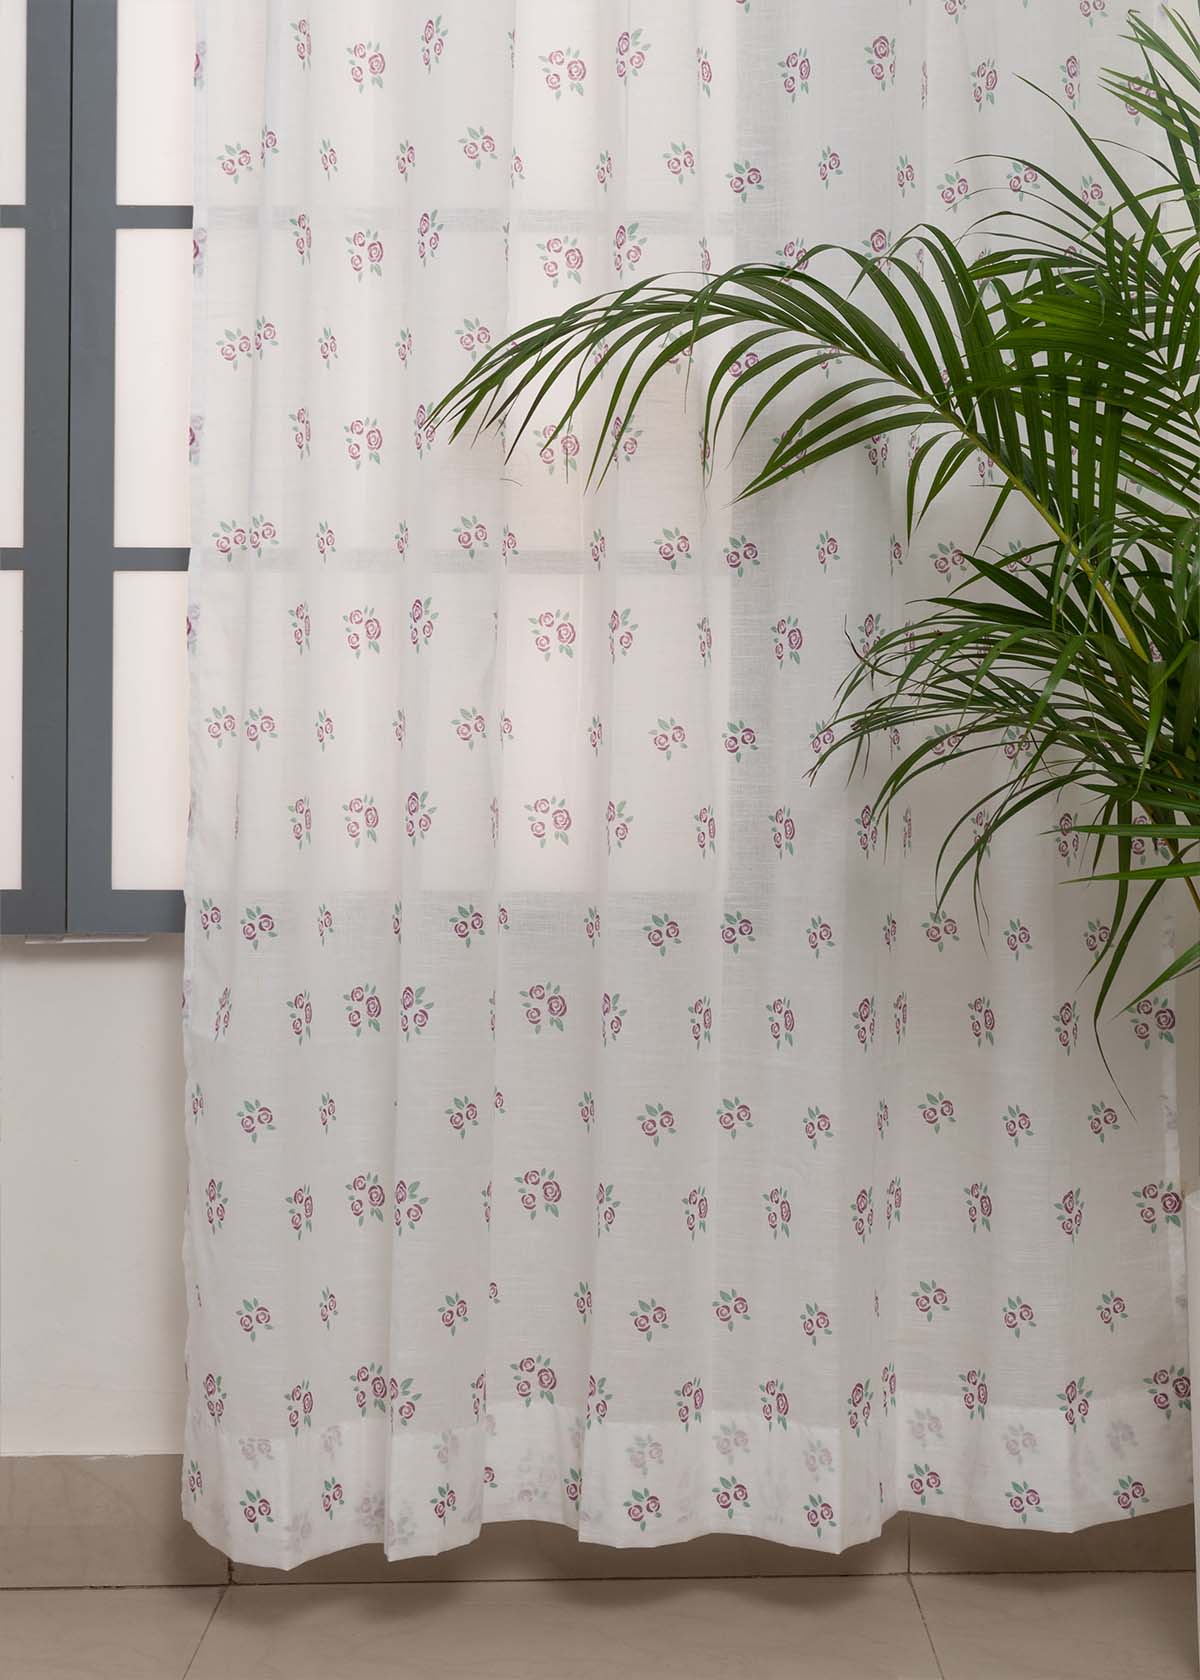 Rose Garden 100% Customizable Cotton Sheer floral curtain for Living room - Light filtering - Lavender